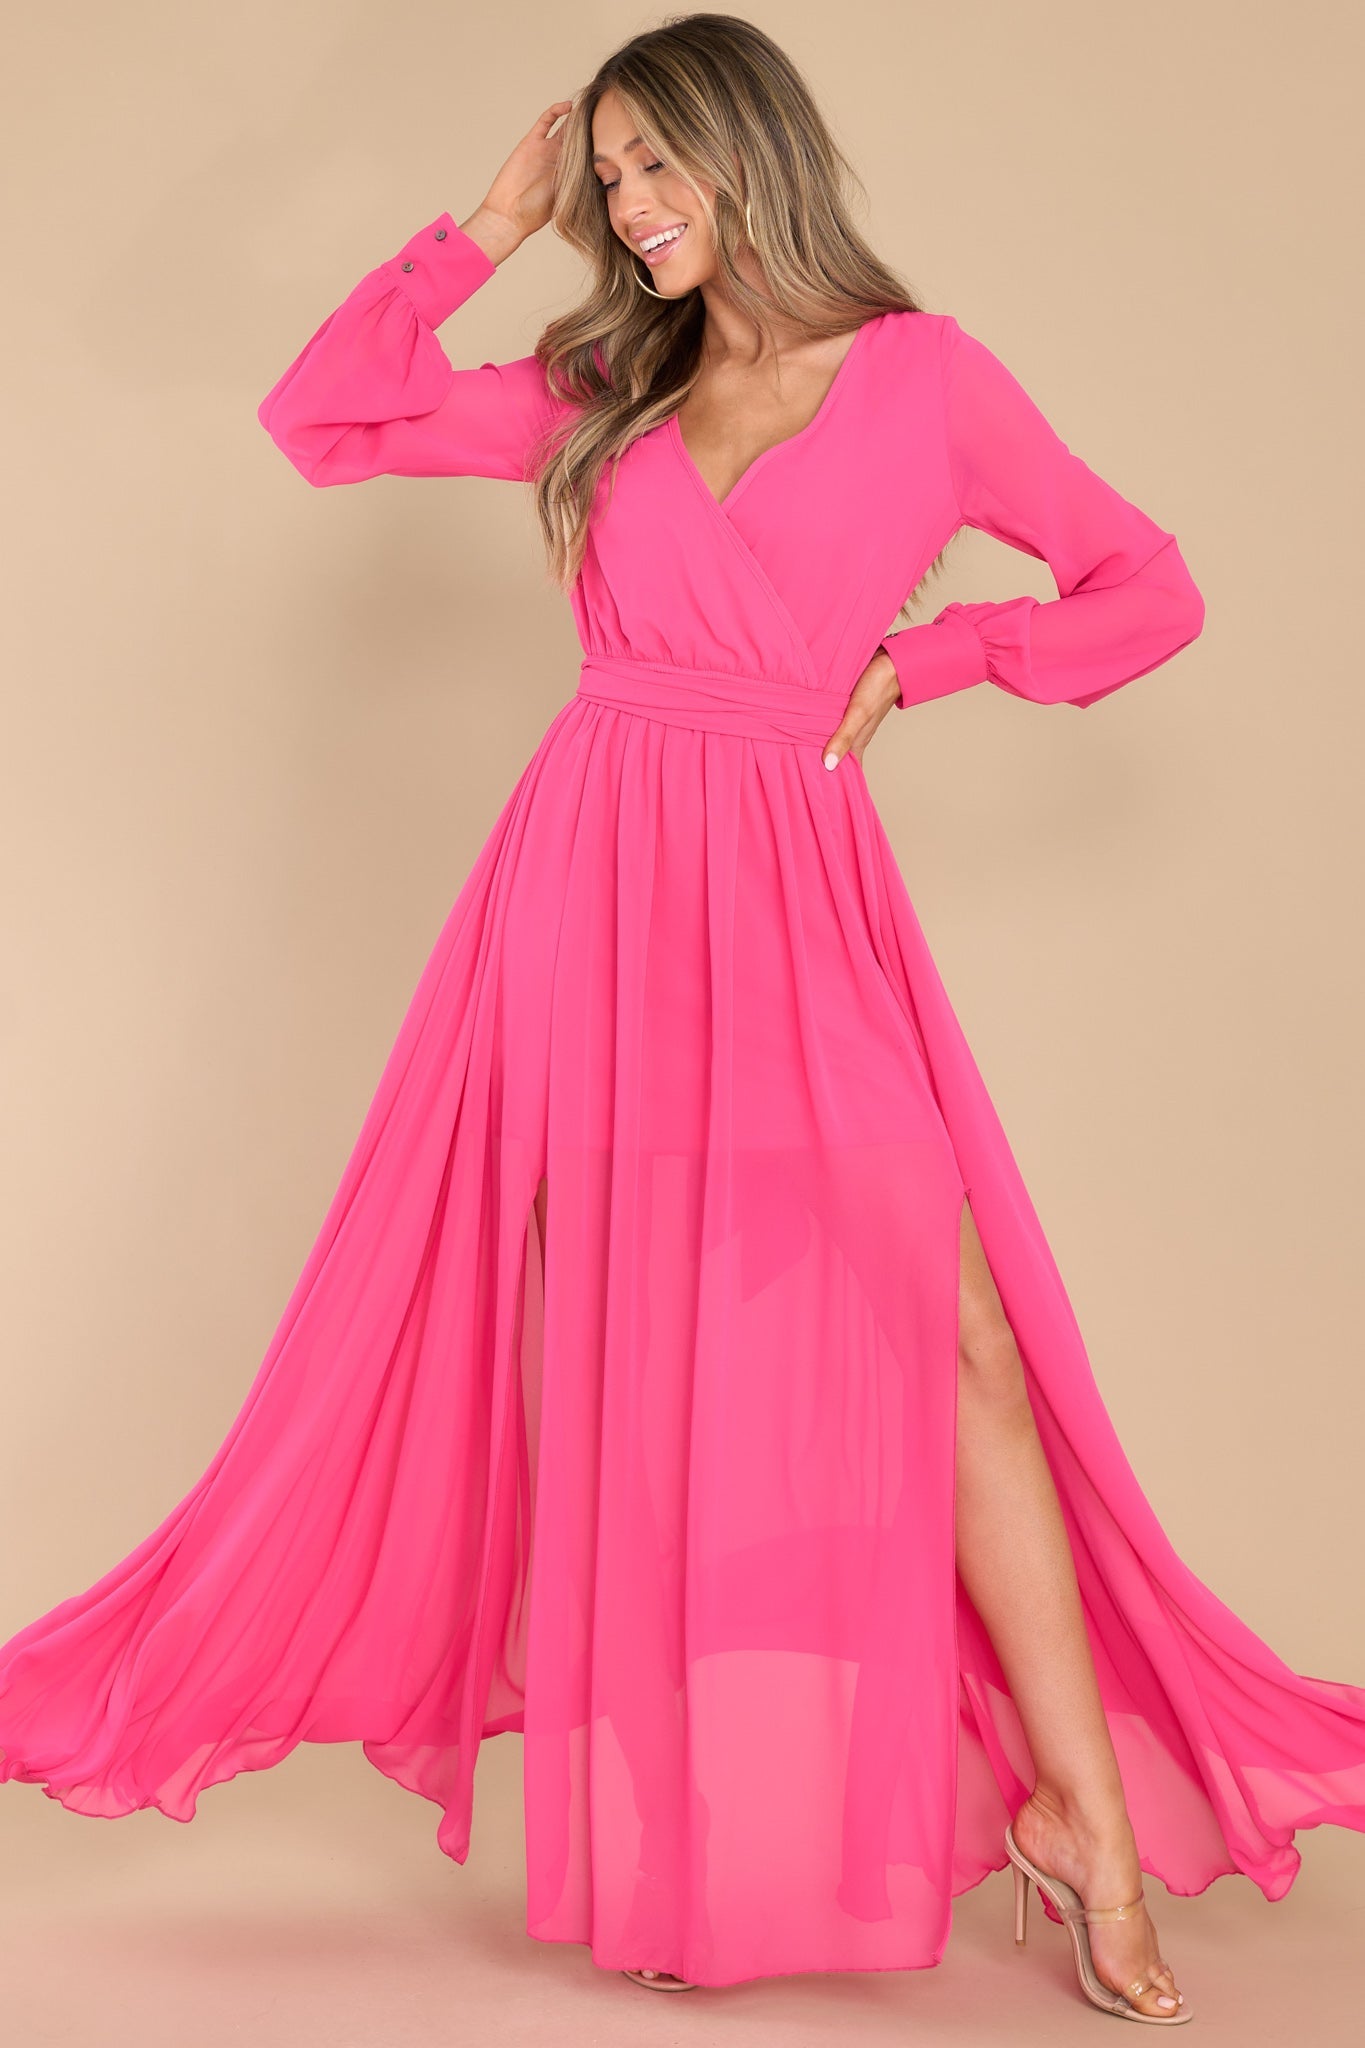 hot pink maxi dress